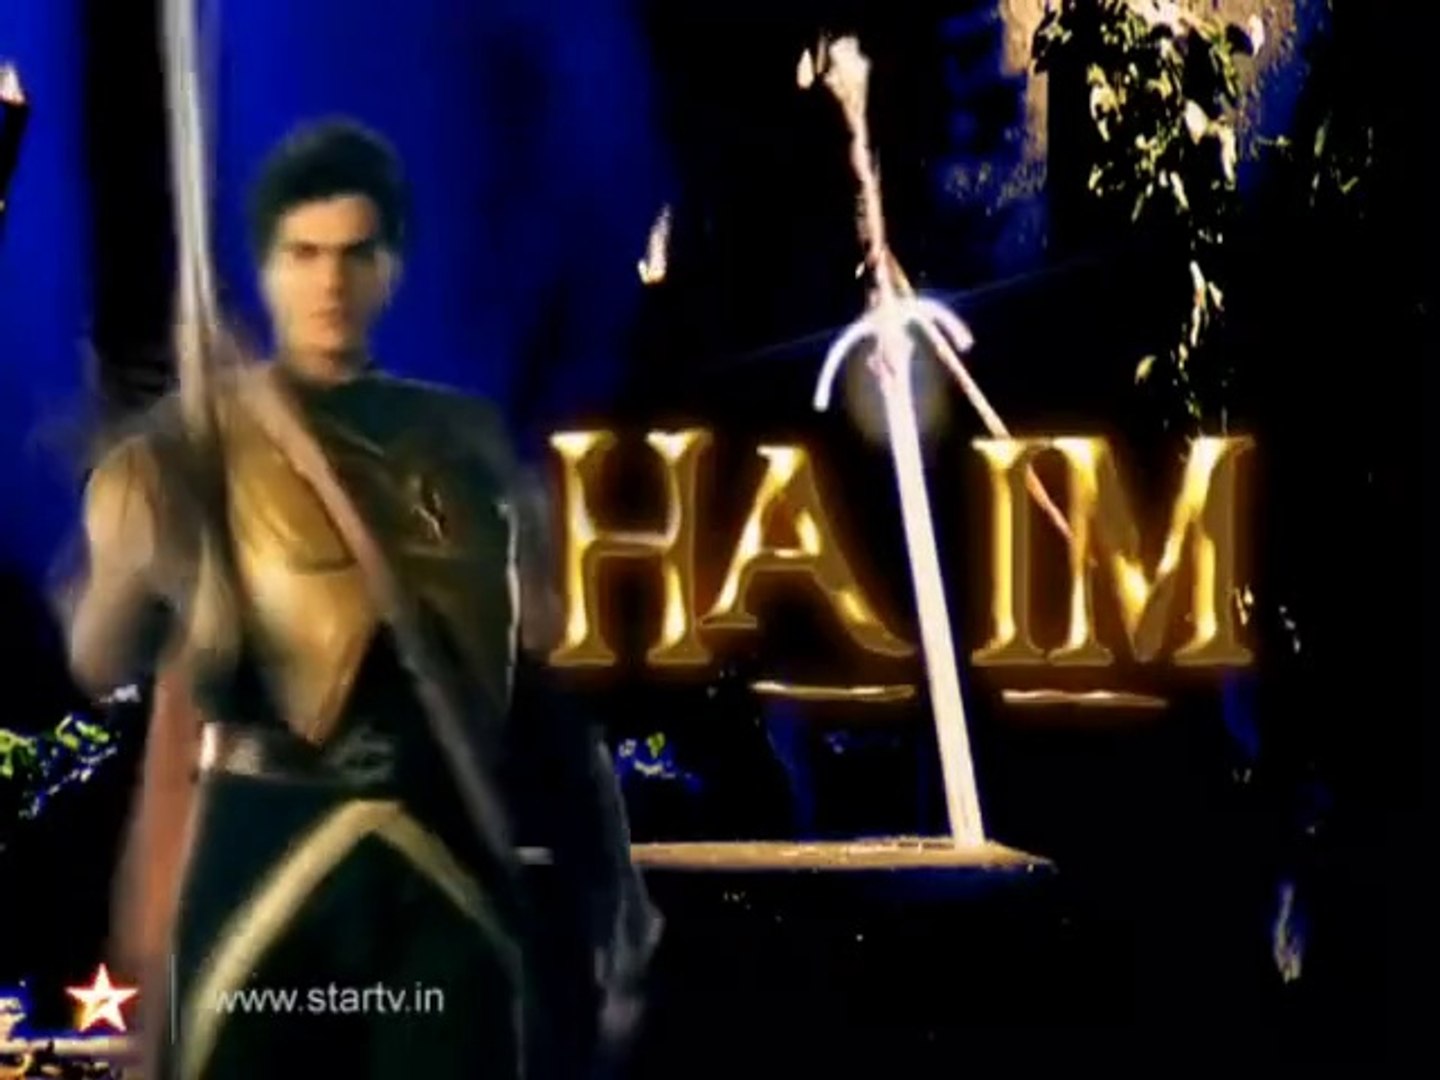 Hatim 2003 all episodes download 480p